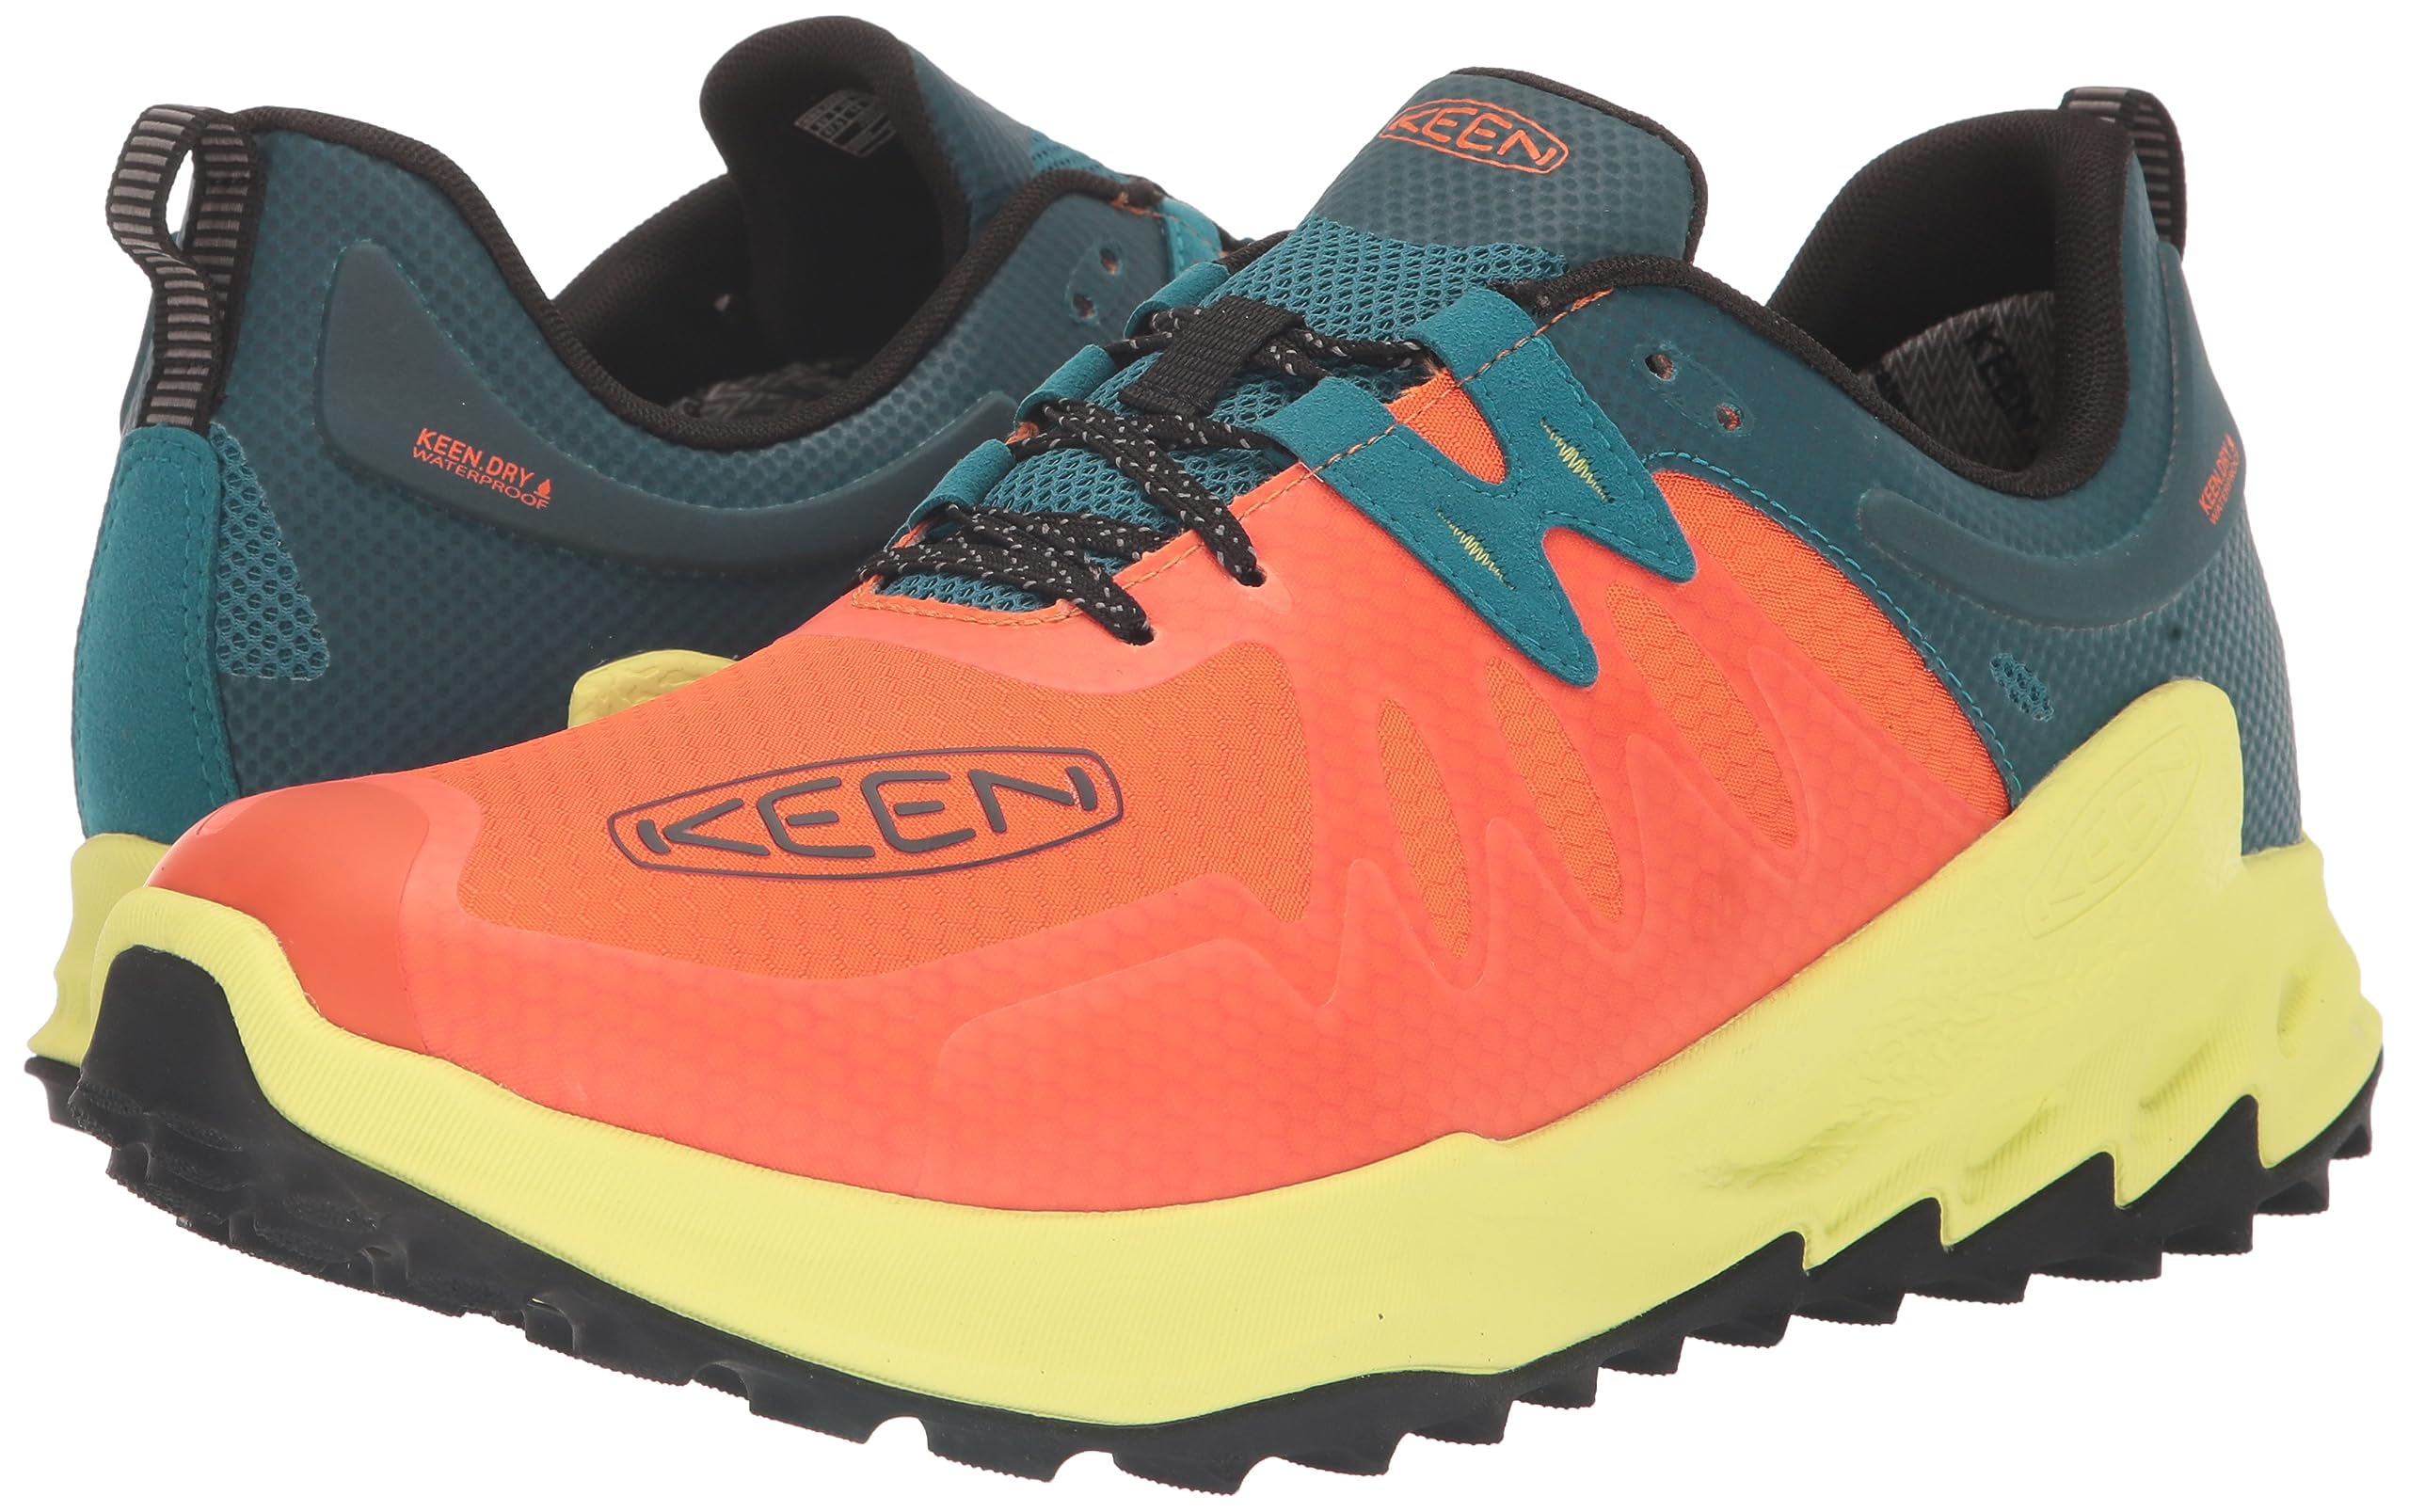 KEEN Men's Zionic Low Height Waterproof All Terrain Hiking Shoes